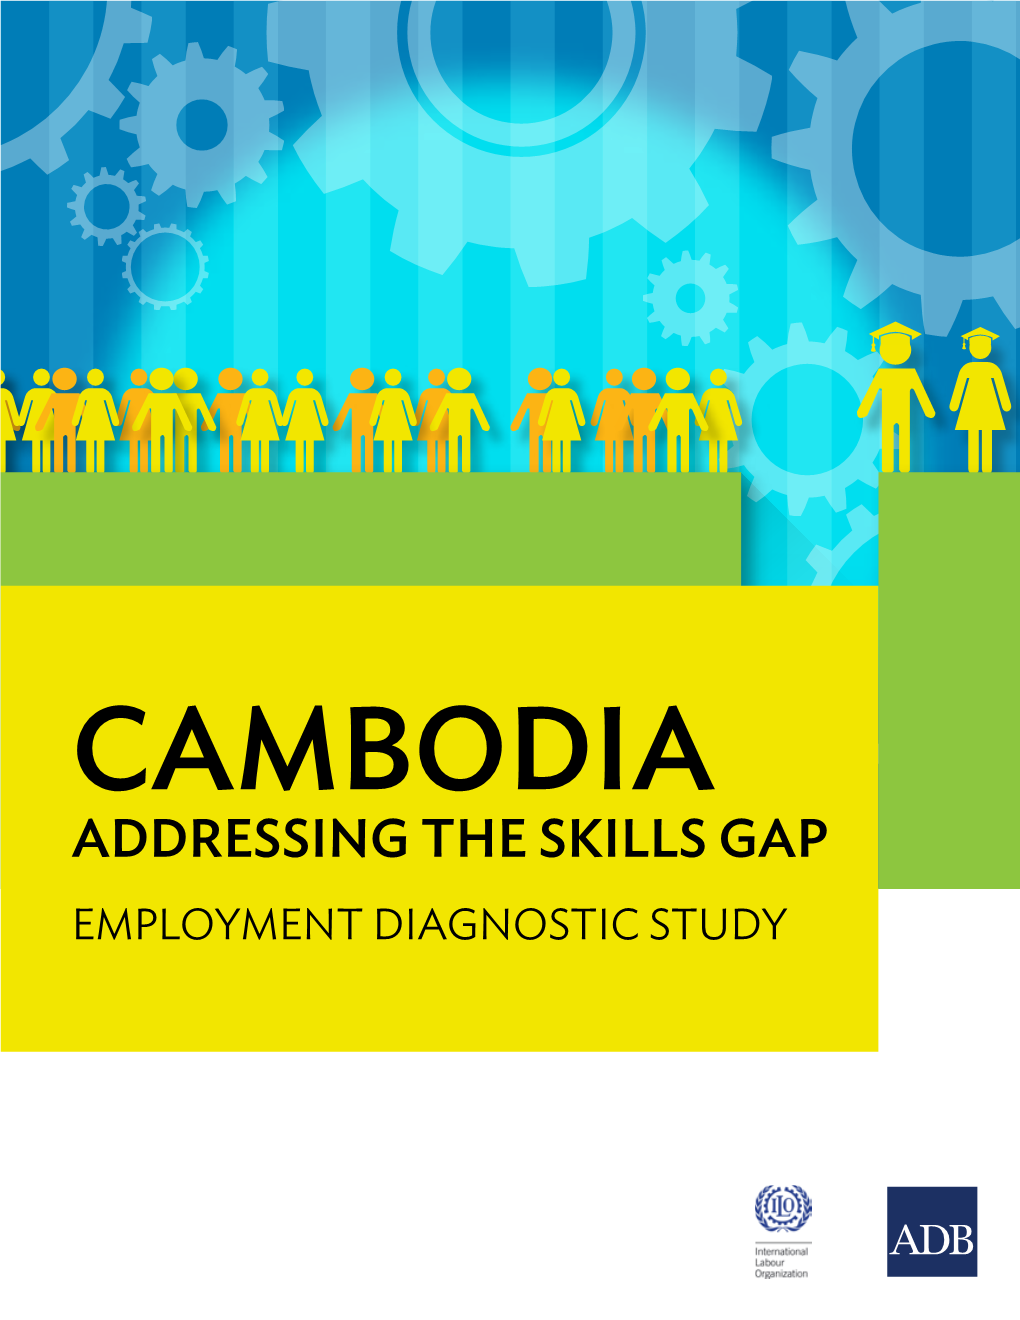 Cambodia: Addressing the Skills Gap